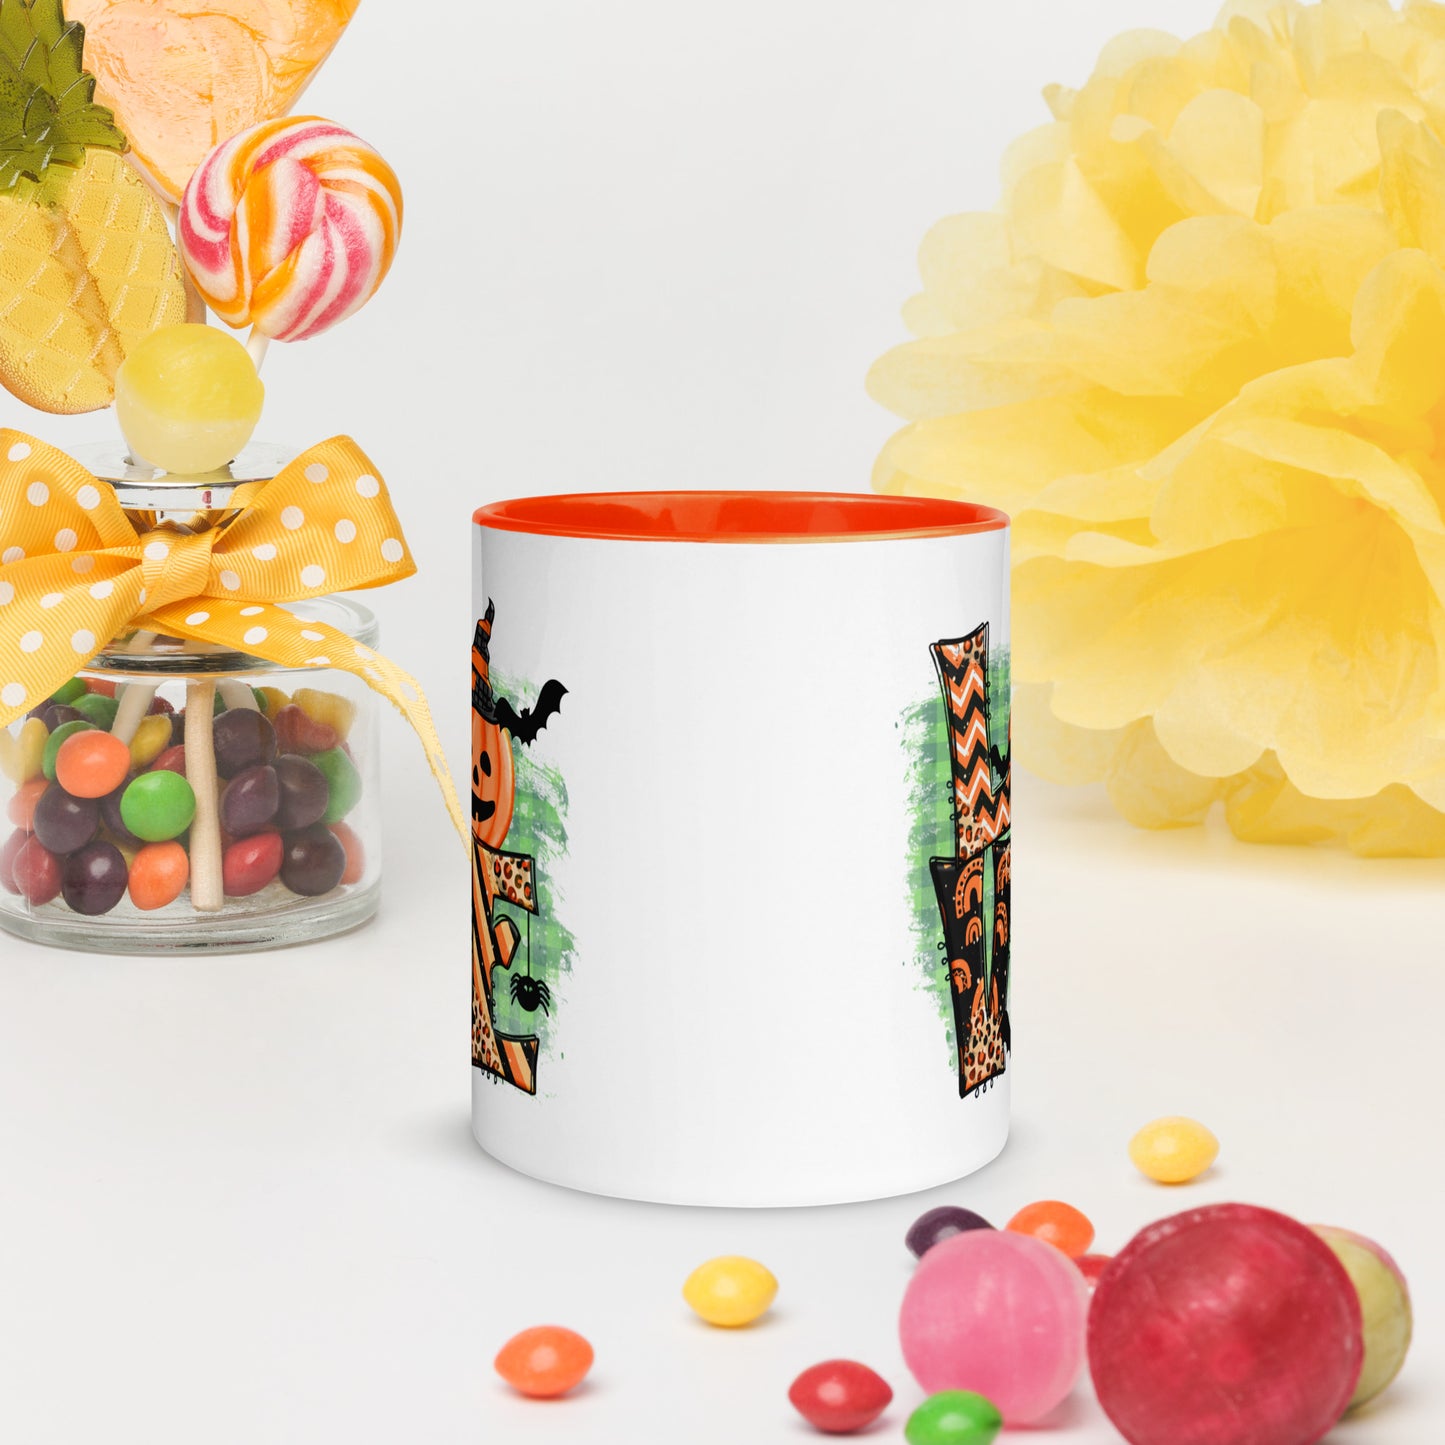 Love Halloween Mug with Color Inside